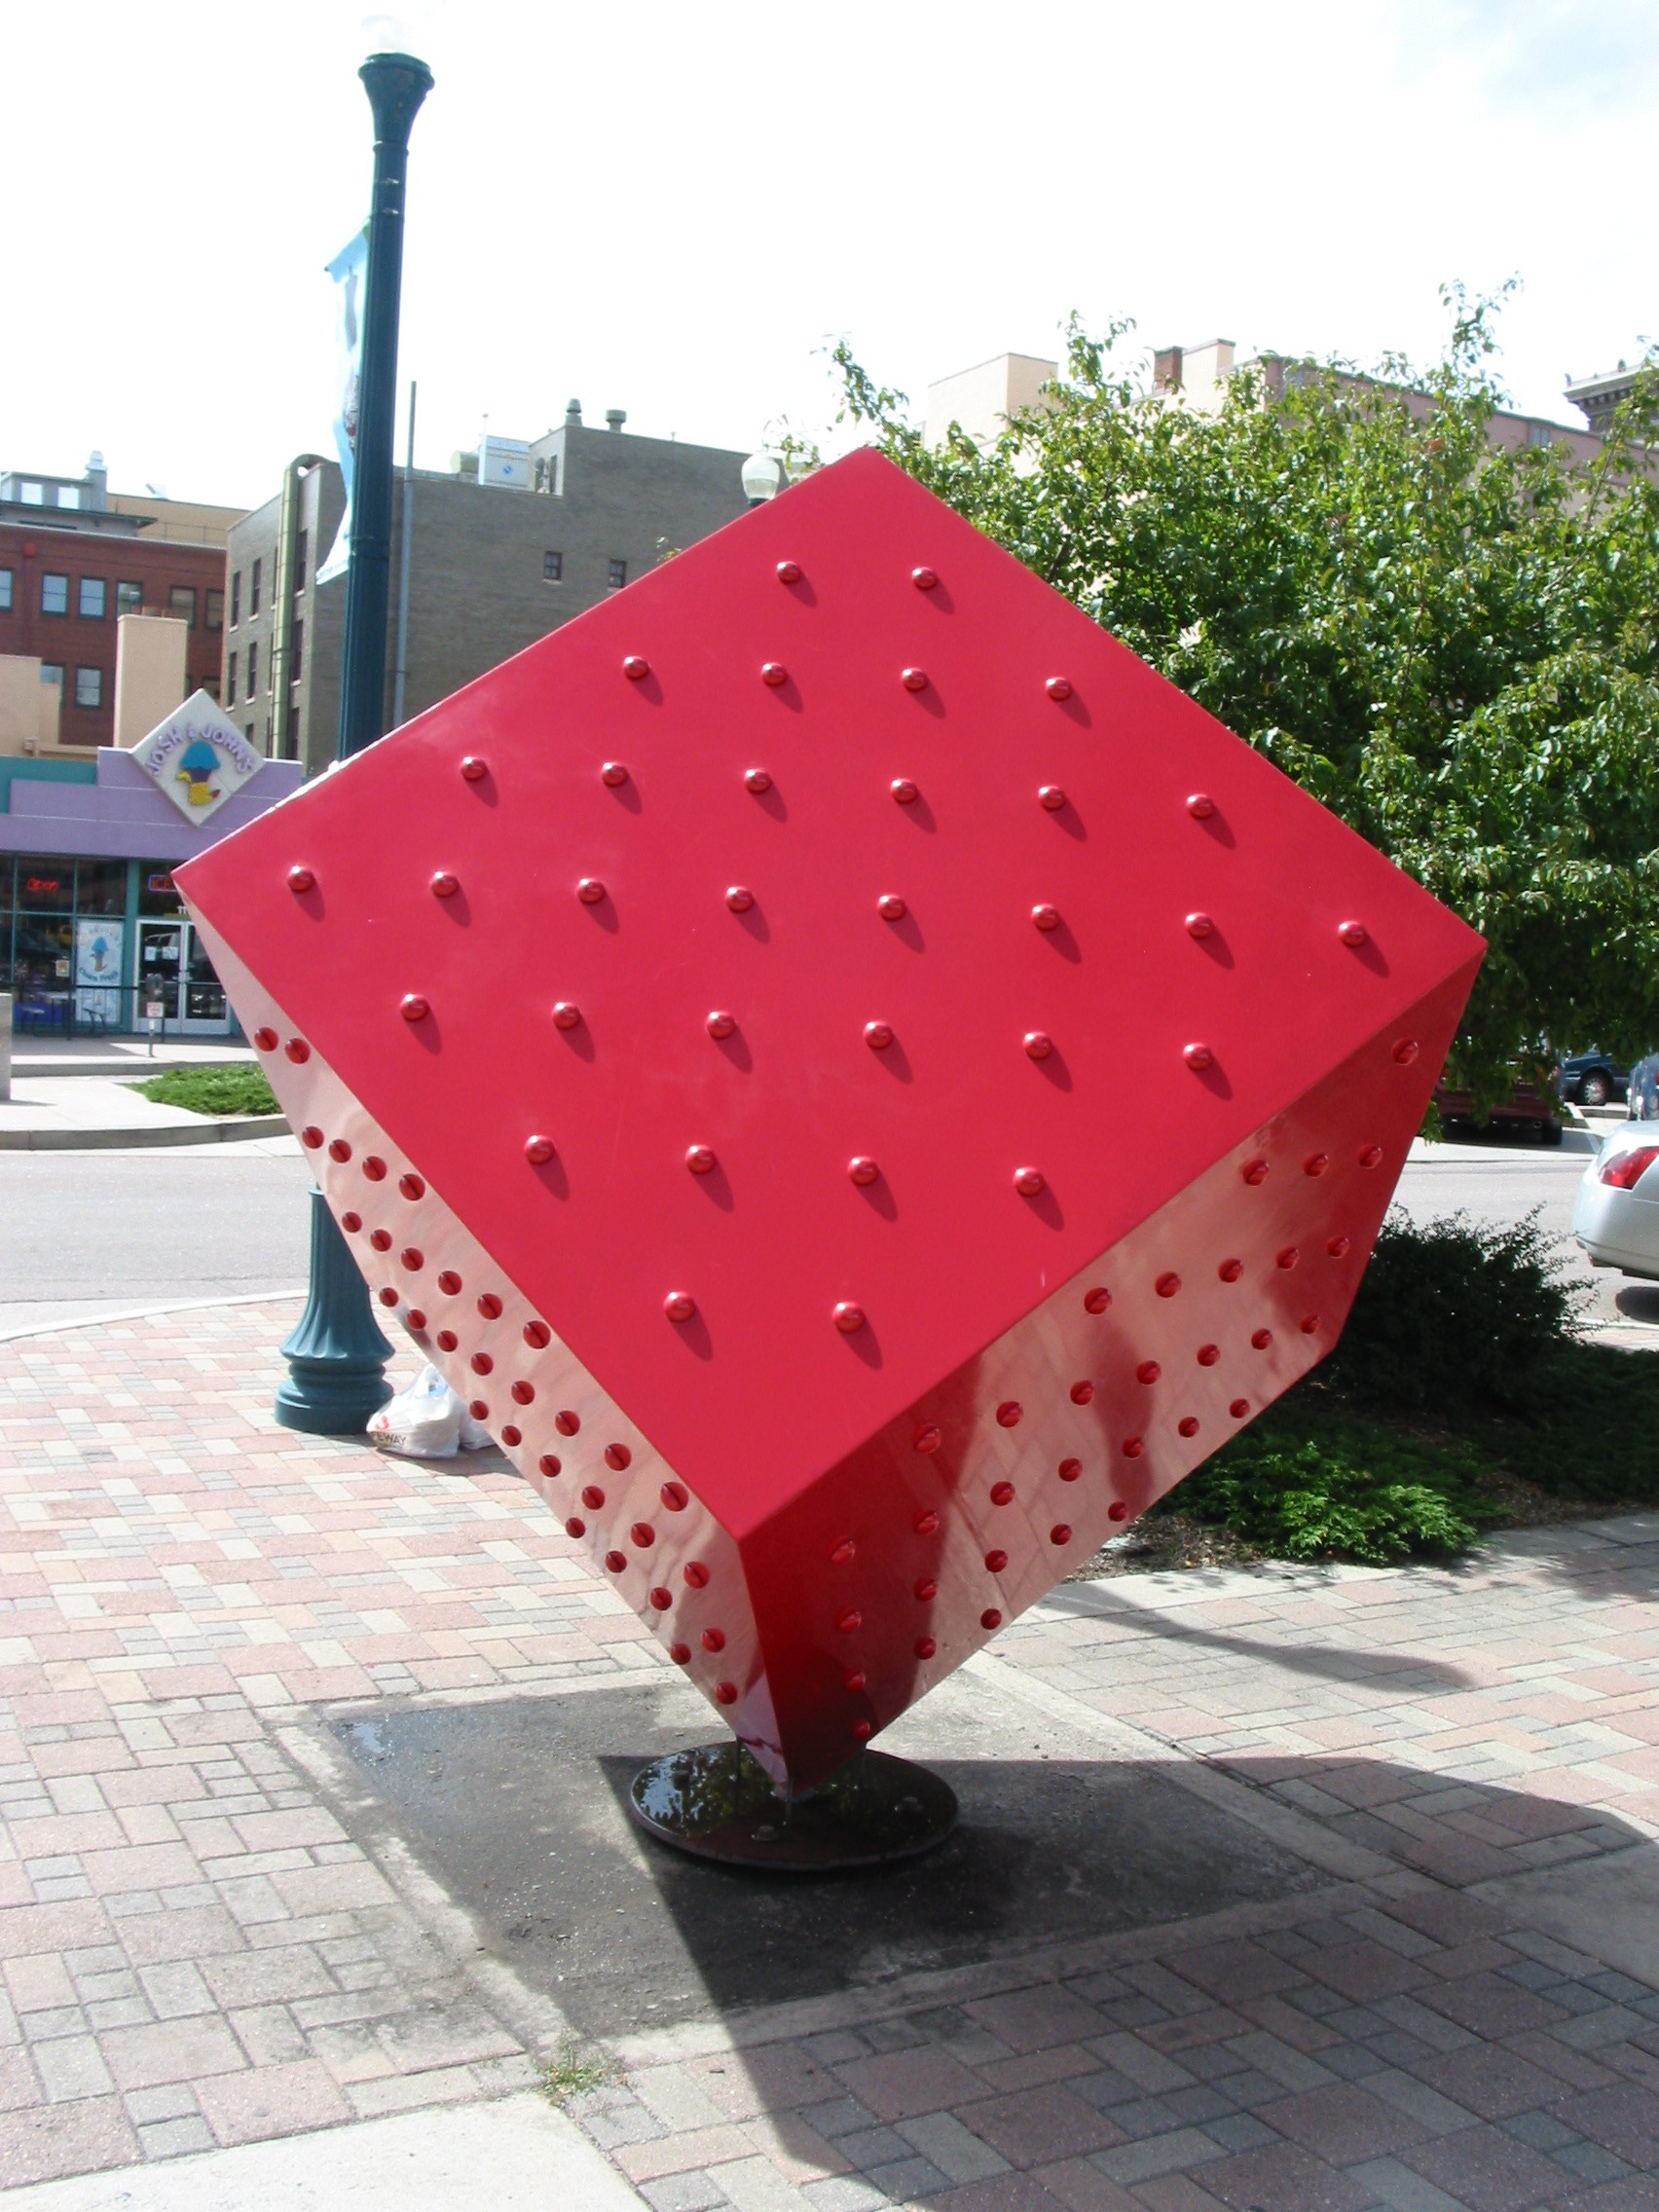 large red cube balancing on one corner